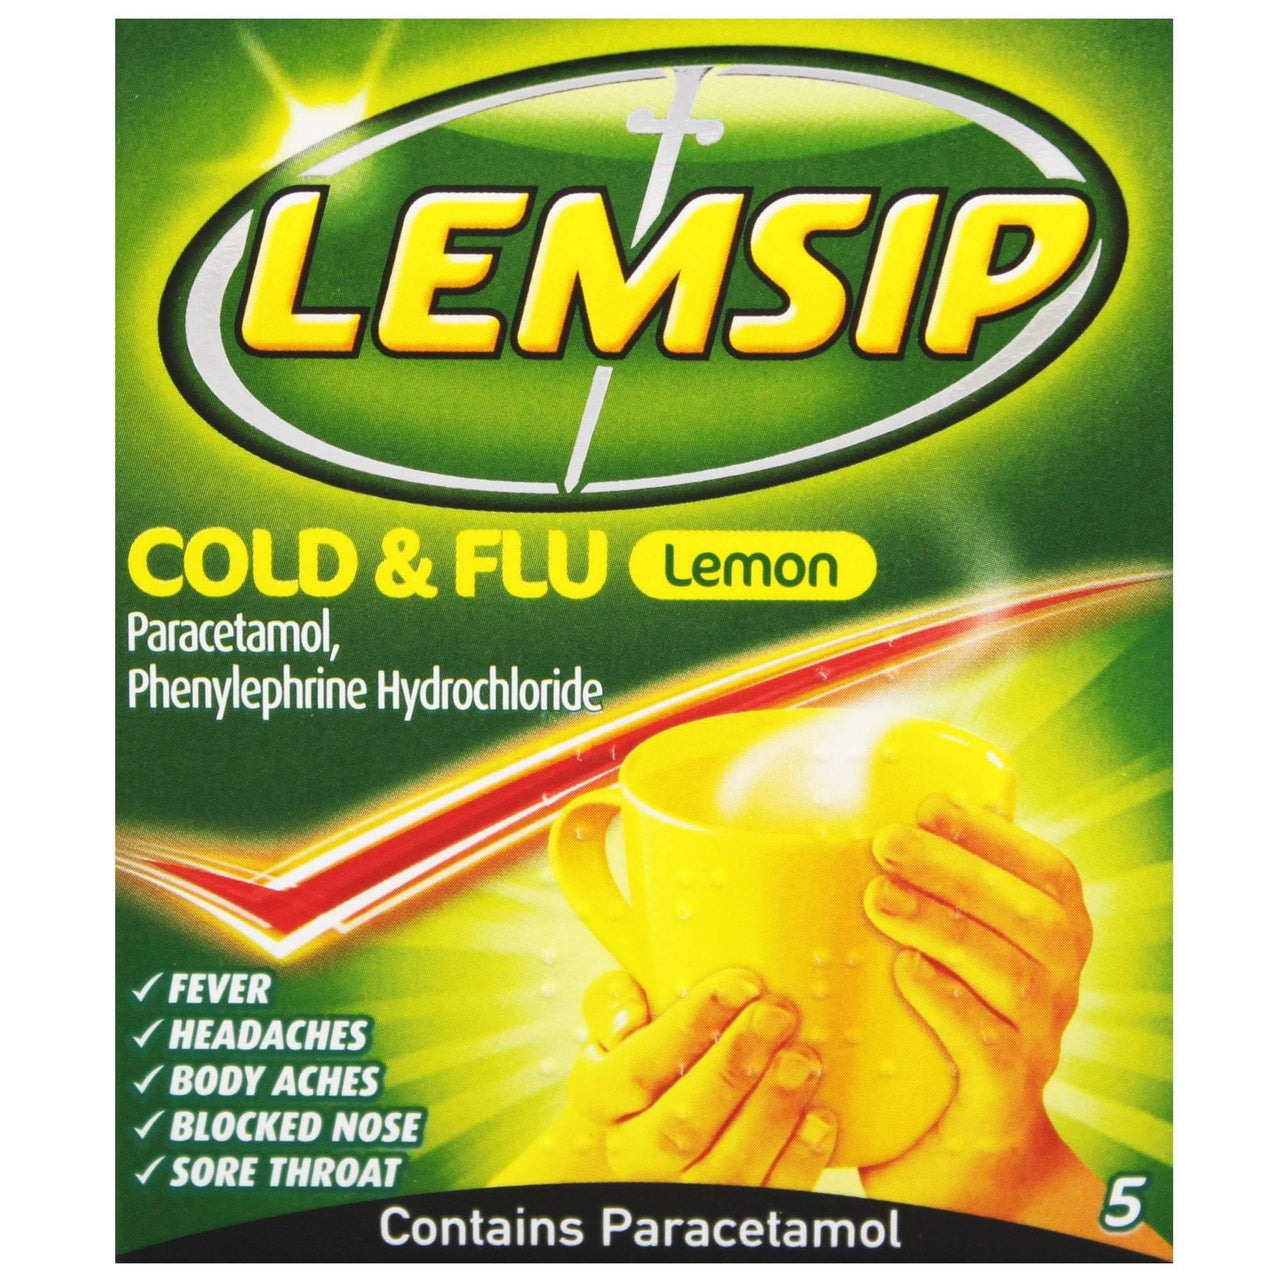 Lemsip Cold & Flu Lemon Sachets - 5's - sassydeals.co.uk